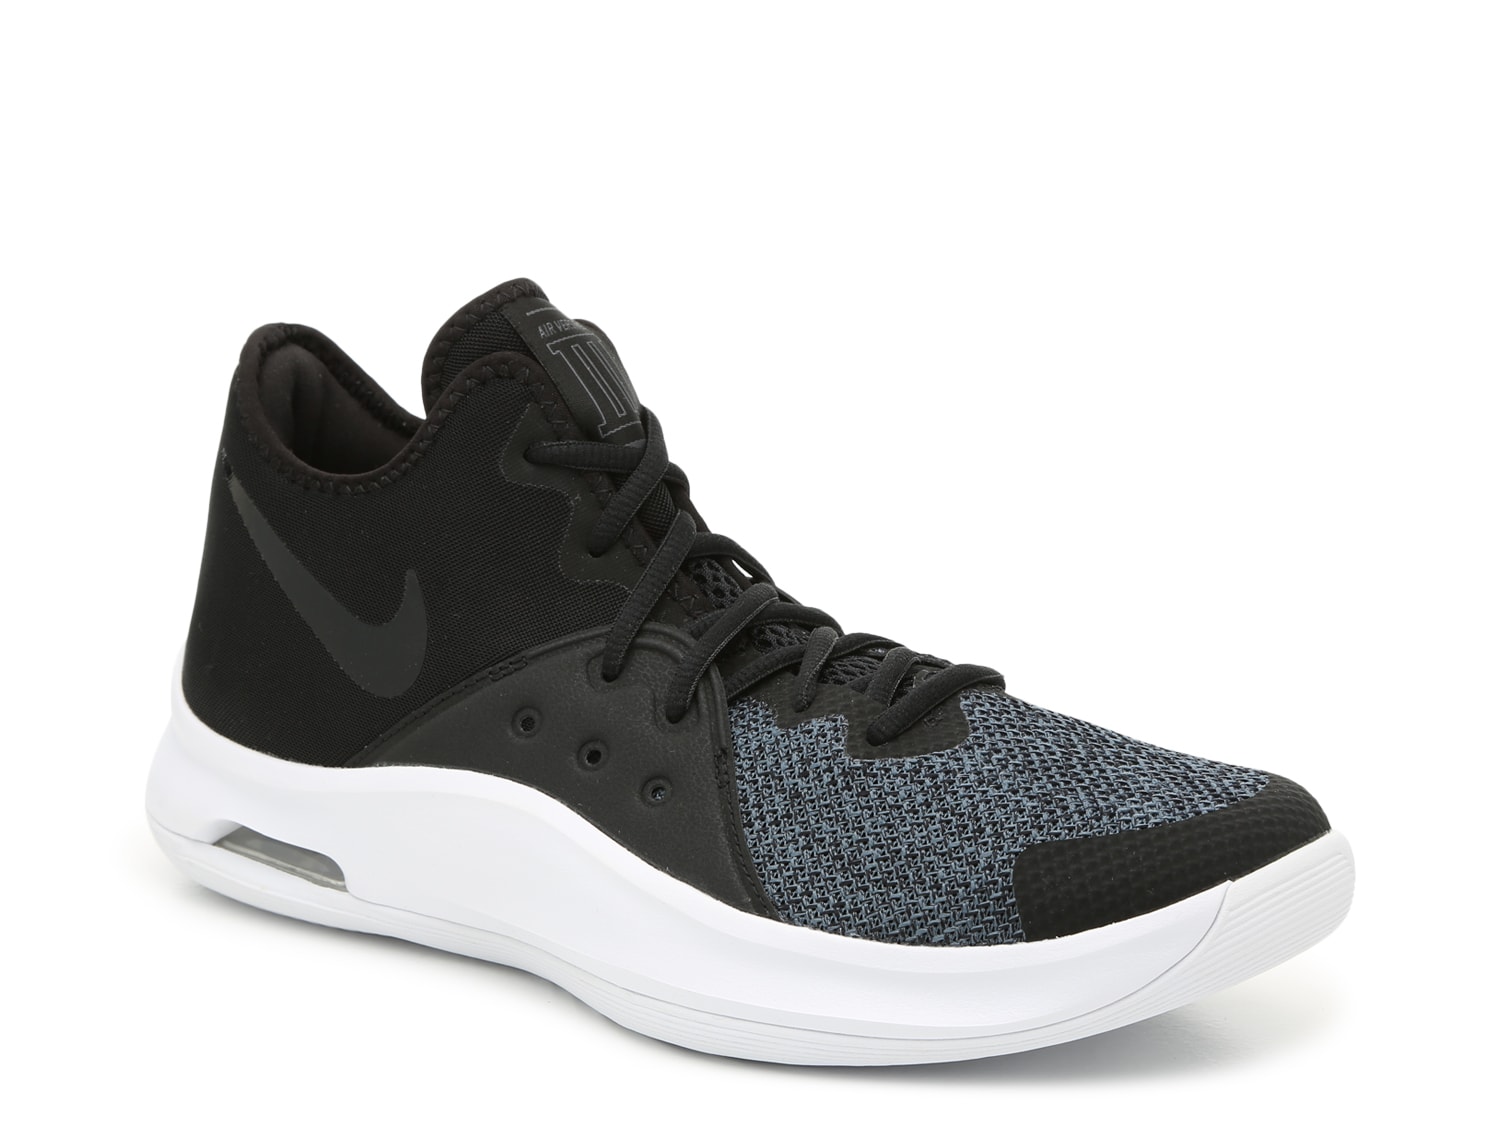 Nike Air Versatile III Basketball Shoe 